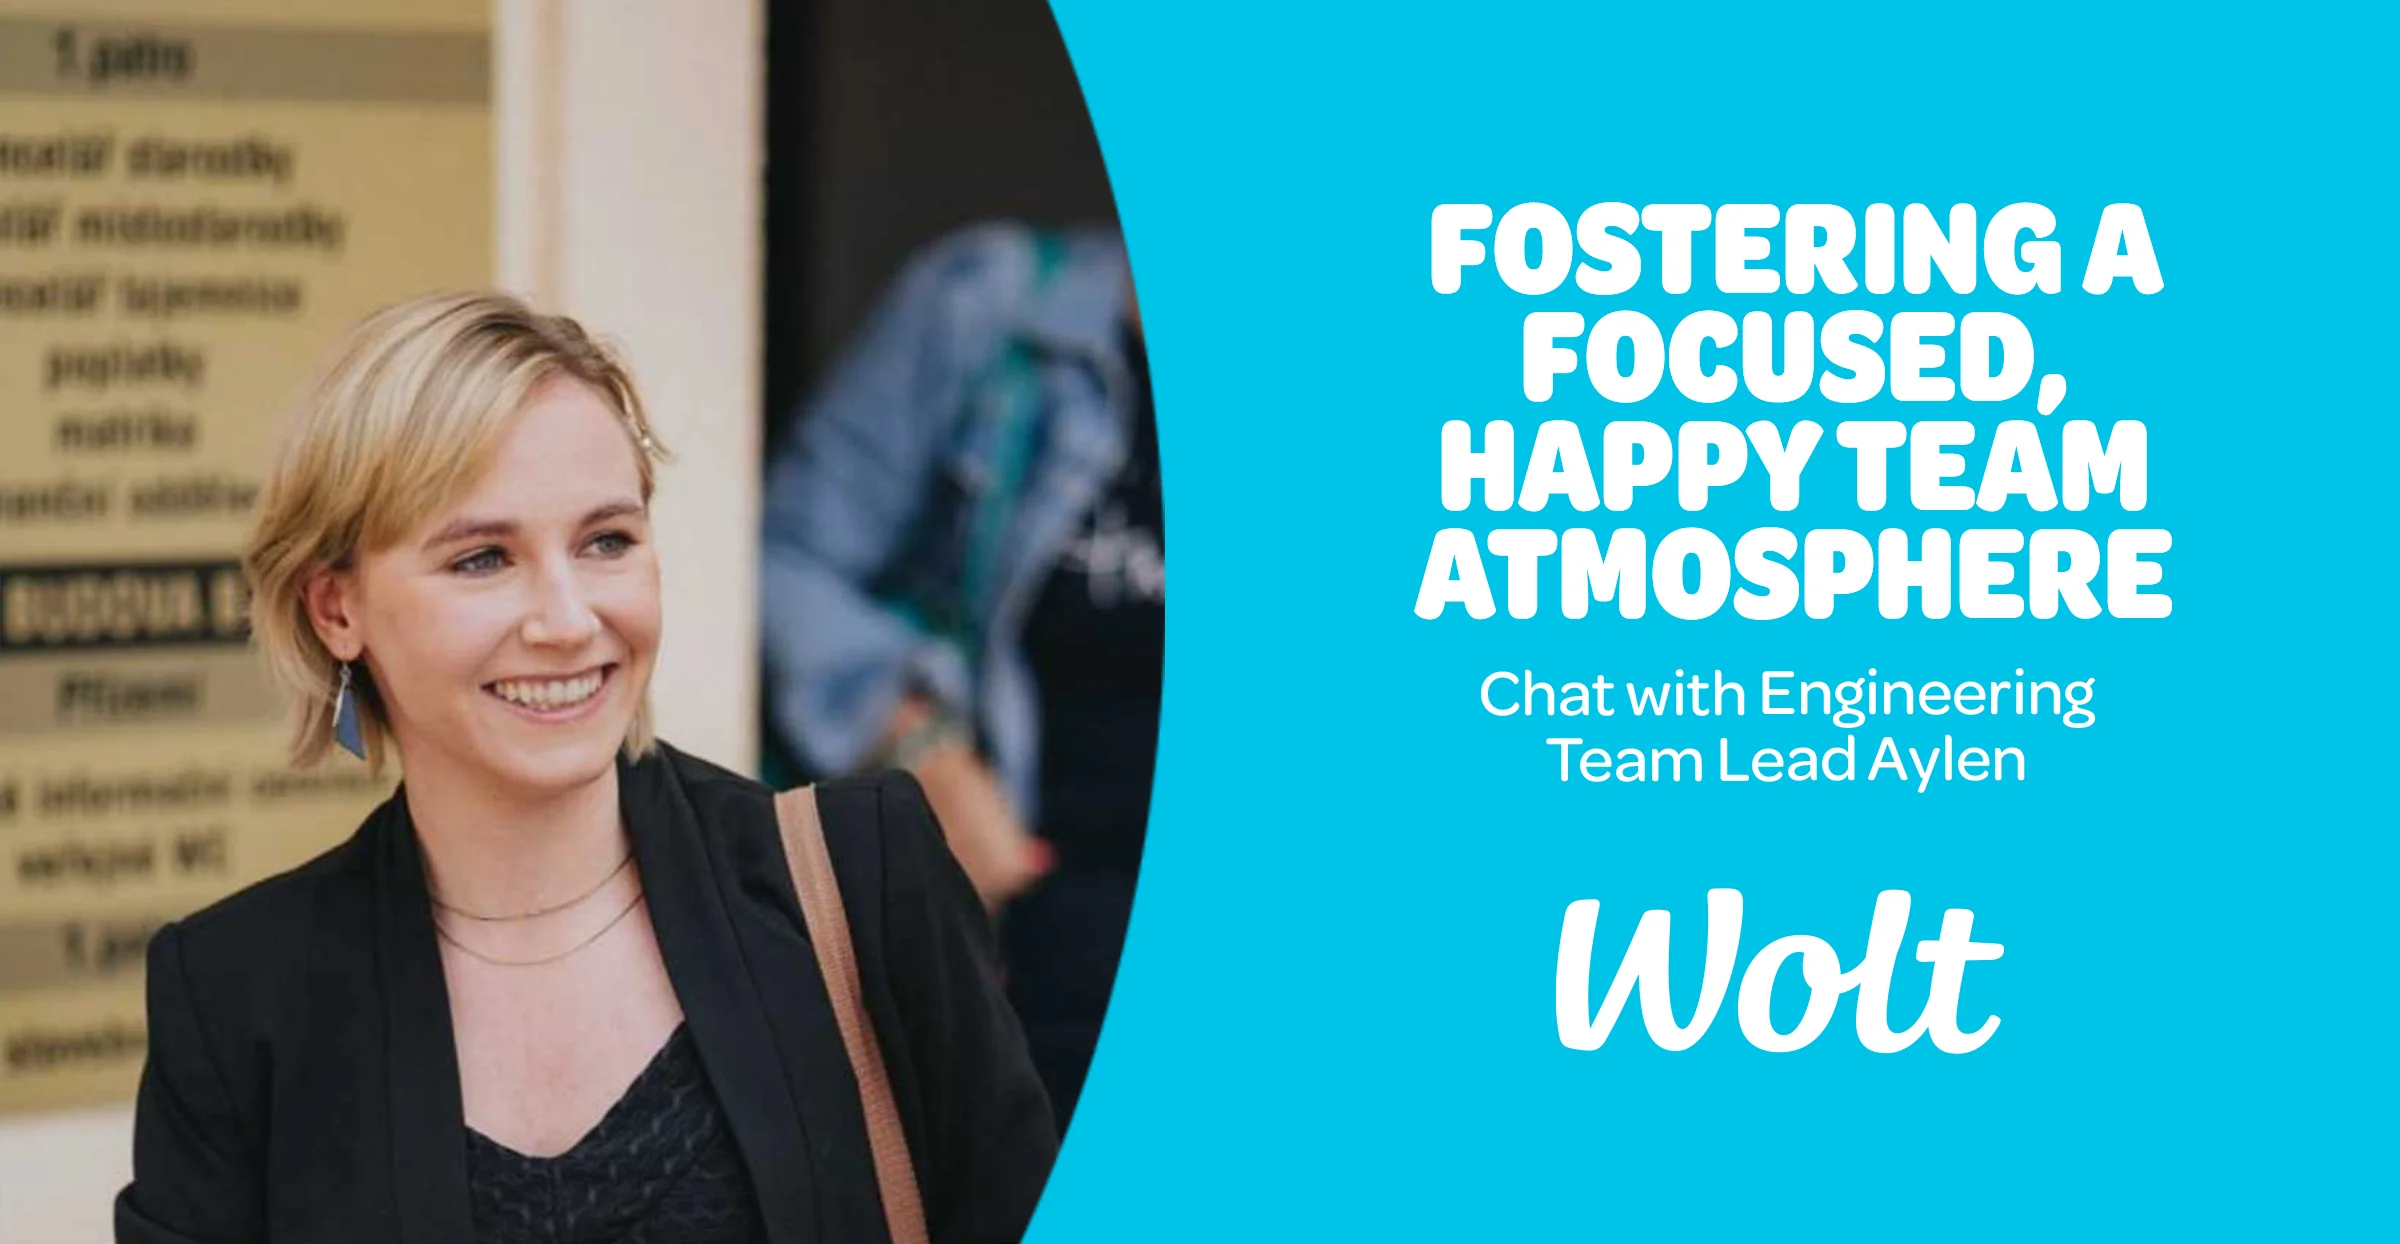 Fostering a focused, happy team atmosphere - Chat with Engineering Team Lead Aylen